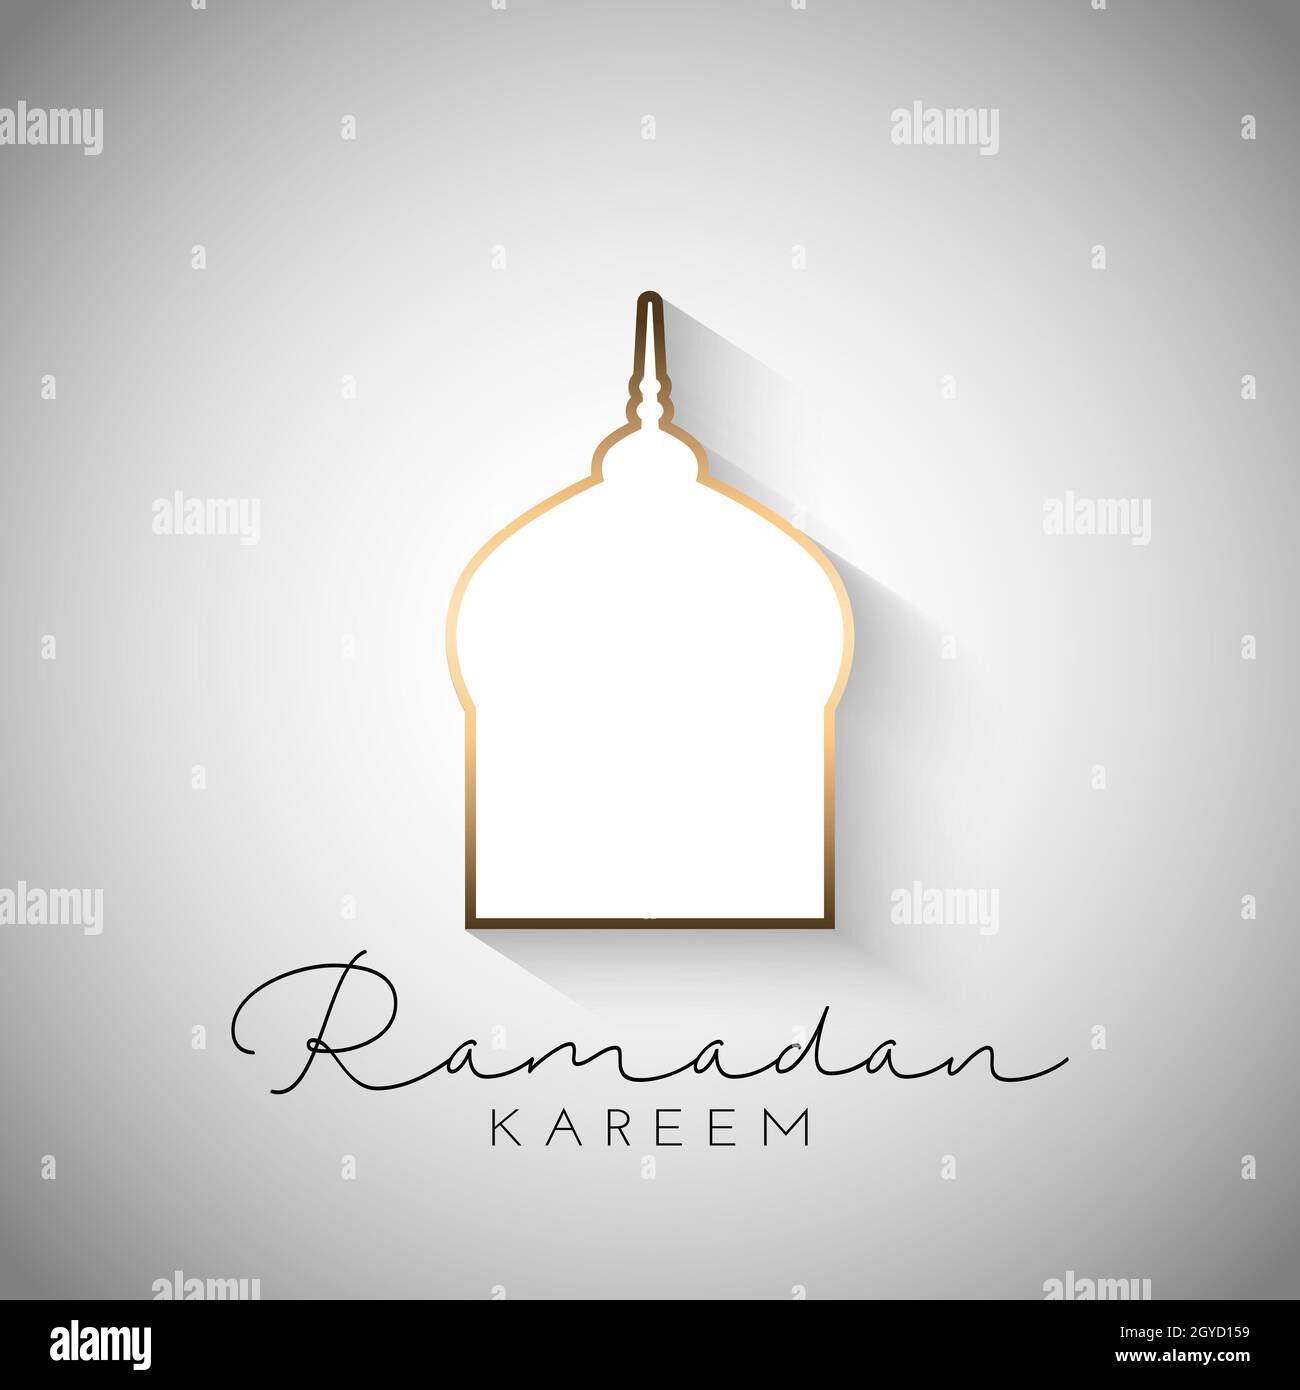 Ramadan Kareem background with simplistic design Stock Photo